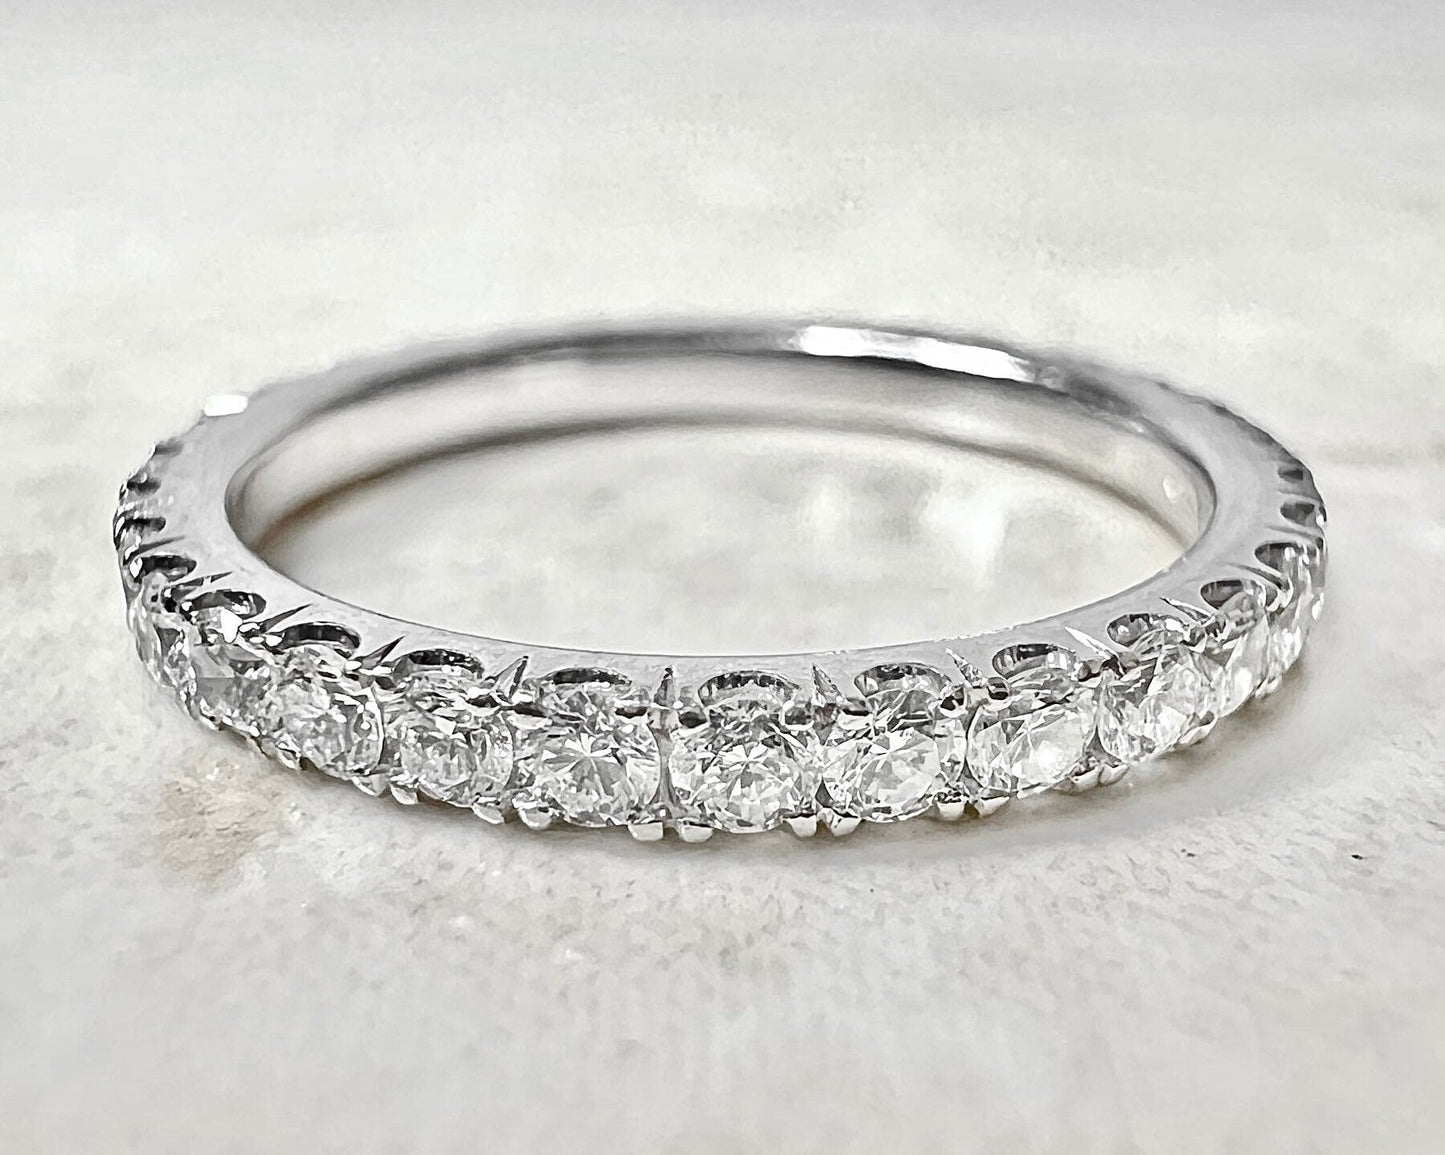 14K White Gold Diamond Eternity Band Ring 0.65 CTTW Eternity Ring - White Gold Diamond Ring - White Gold Diamond Band -Diamond Wedding Band